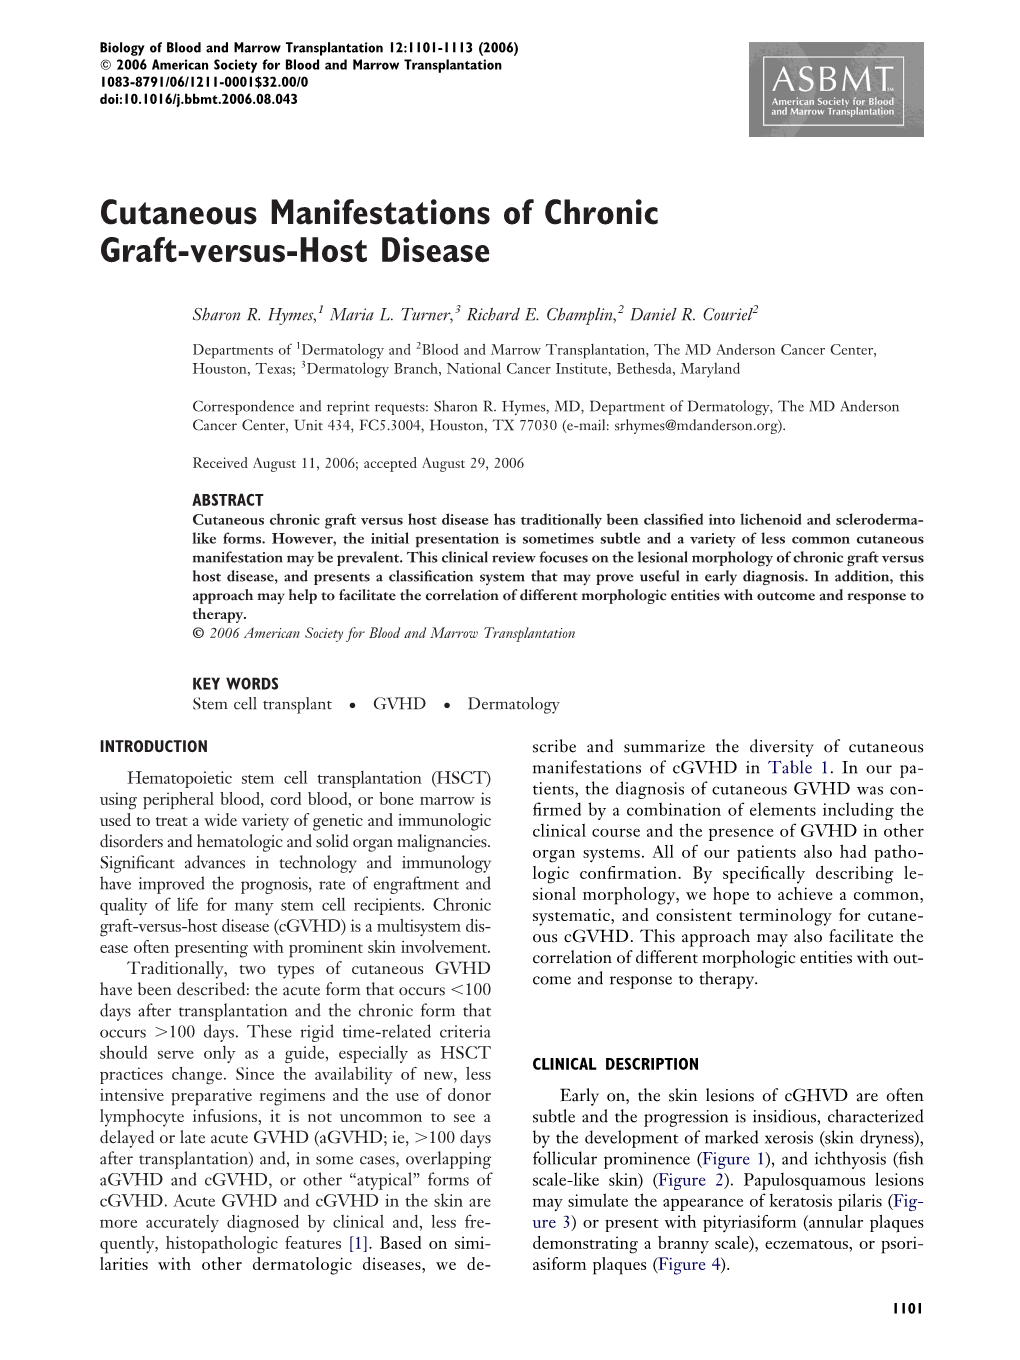 Cutaneous Manifestations of Chronic Graft-Versus-Host Disease